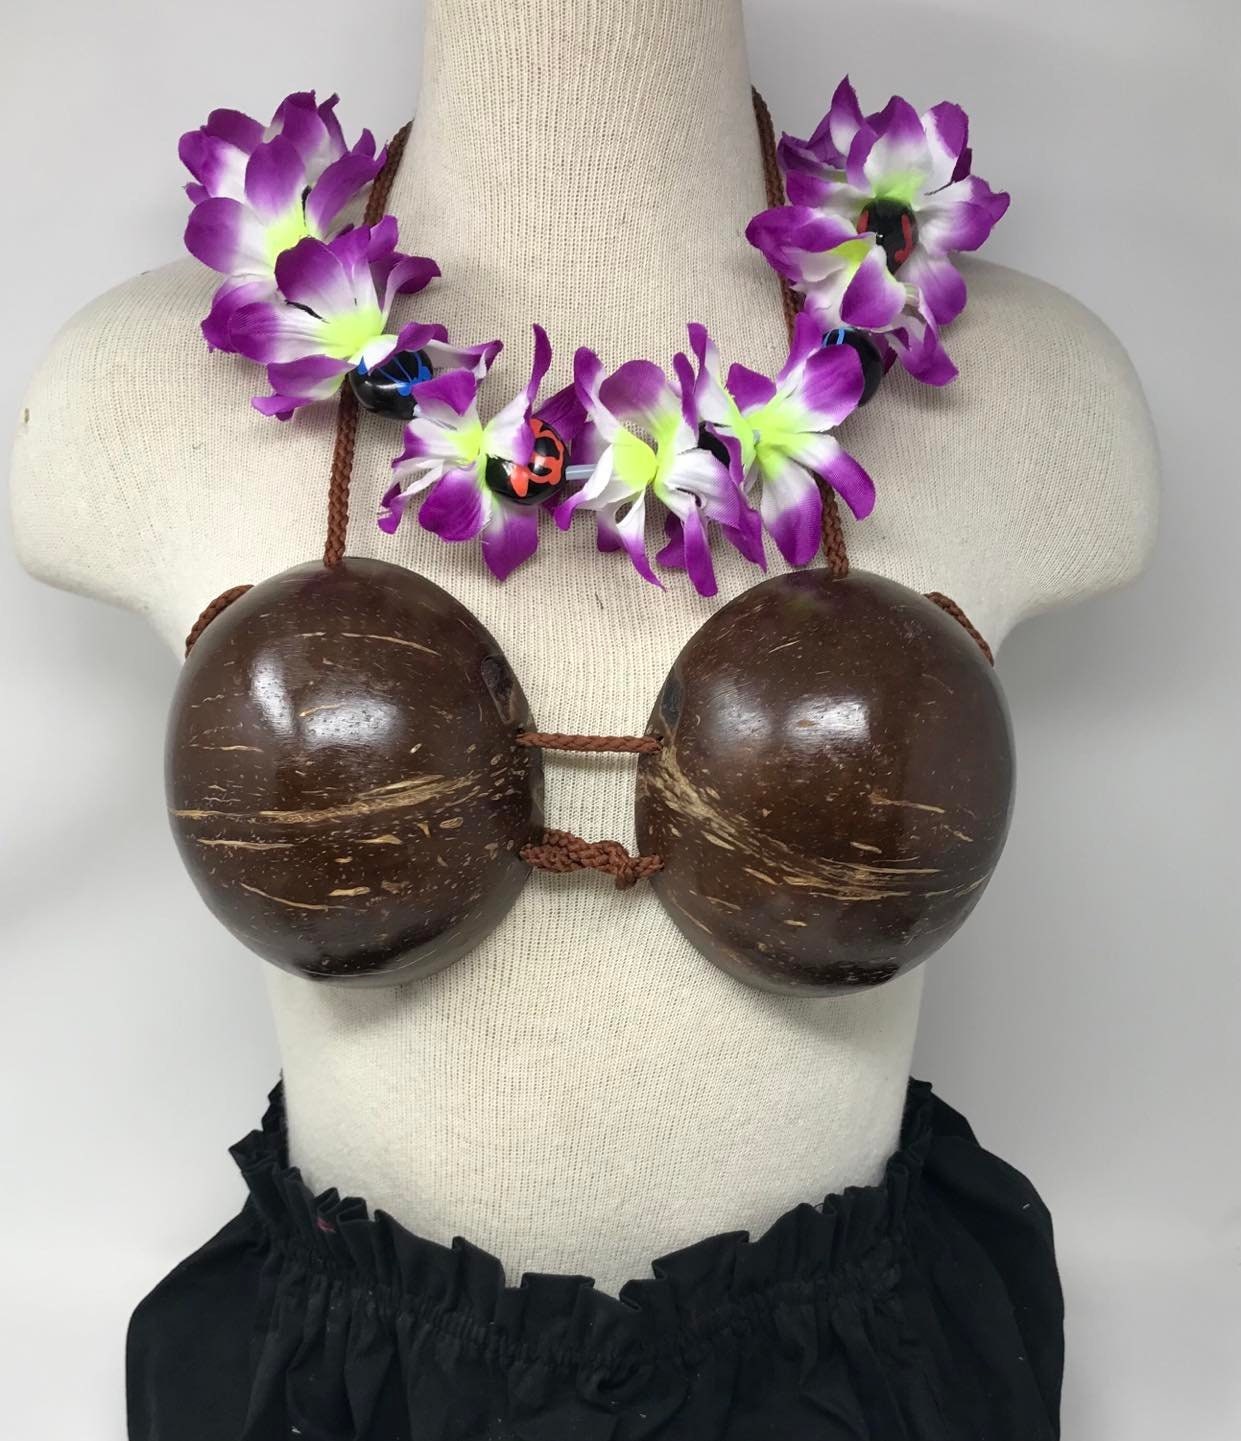 Coconut Bra Flower Boobs Hawaii Aloha Beaches' Baseball Cap